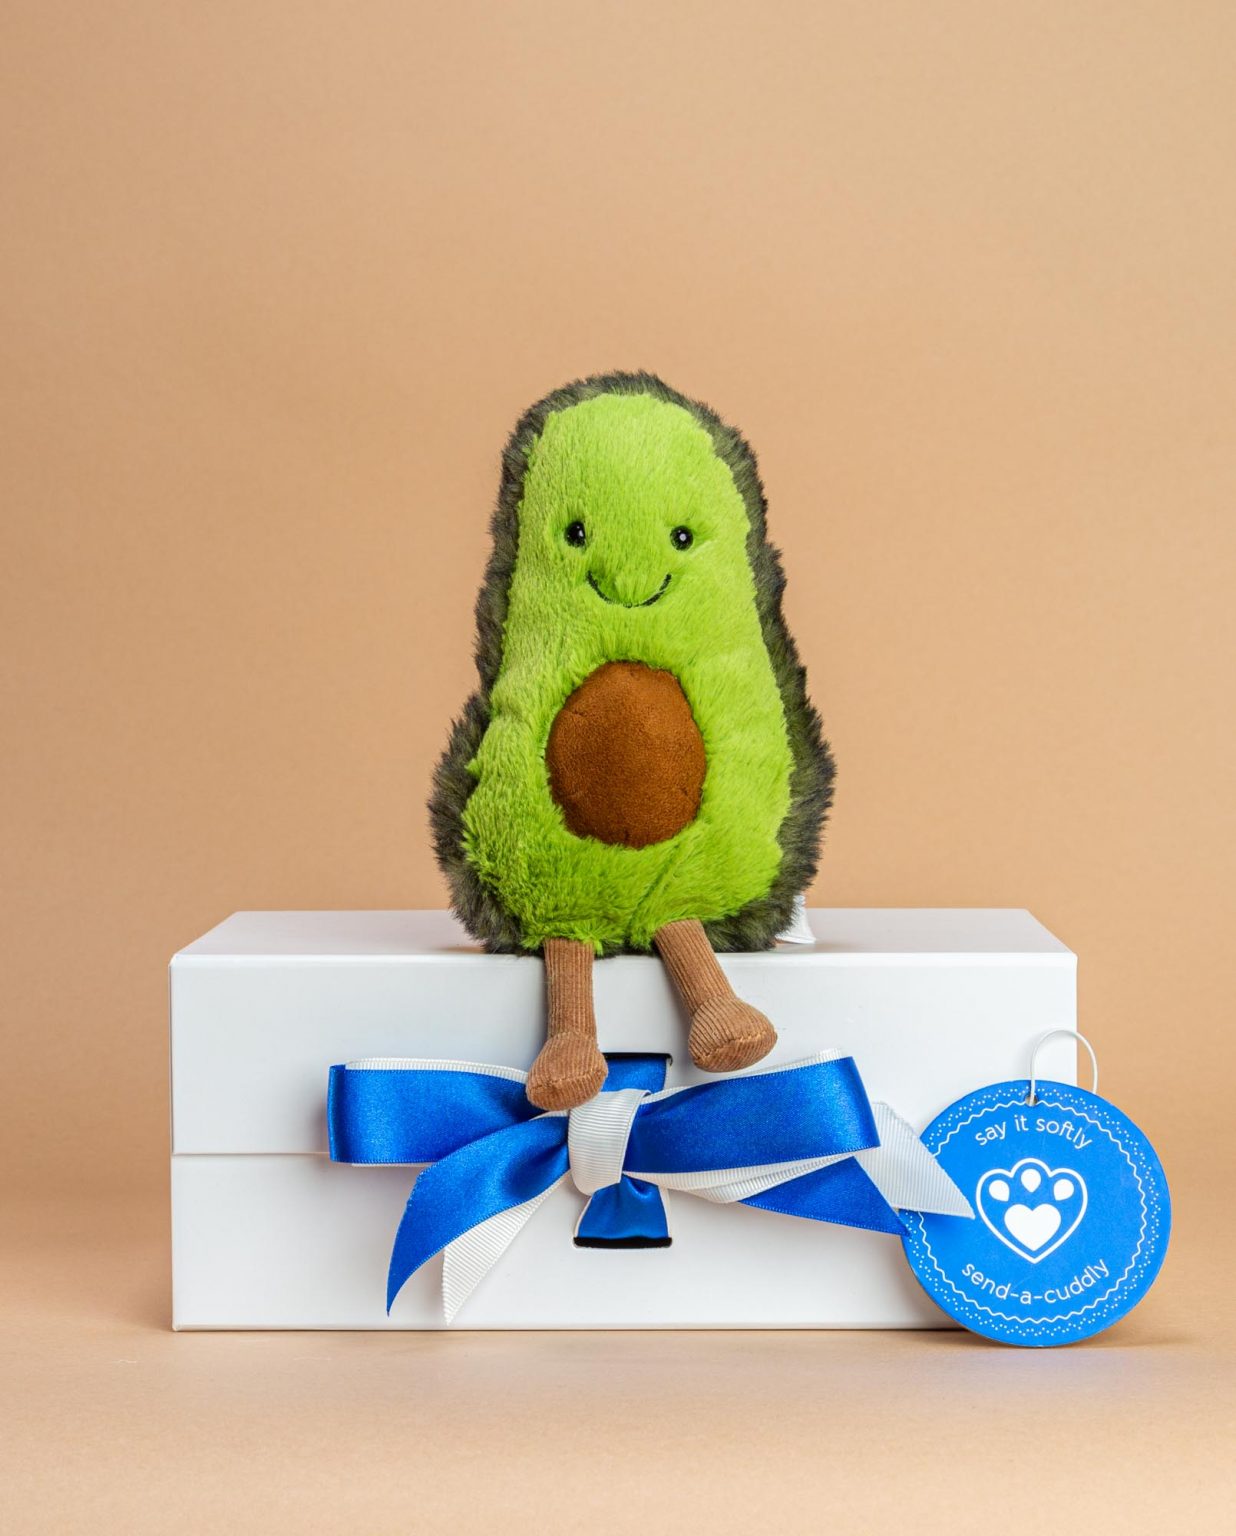 Avocado soft toy gift - Send a Cuddly